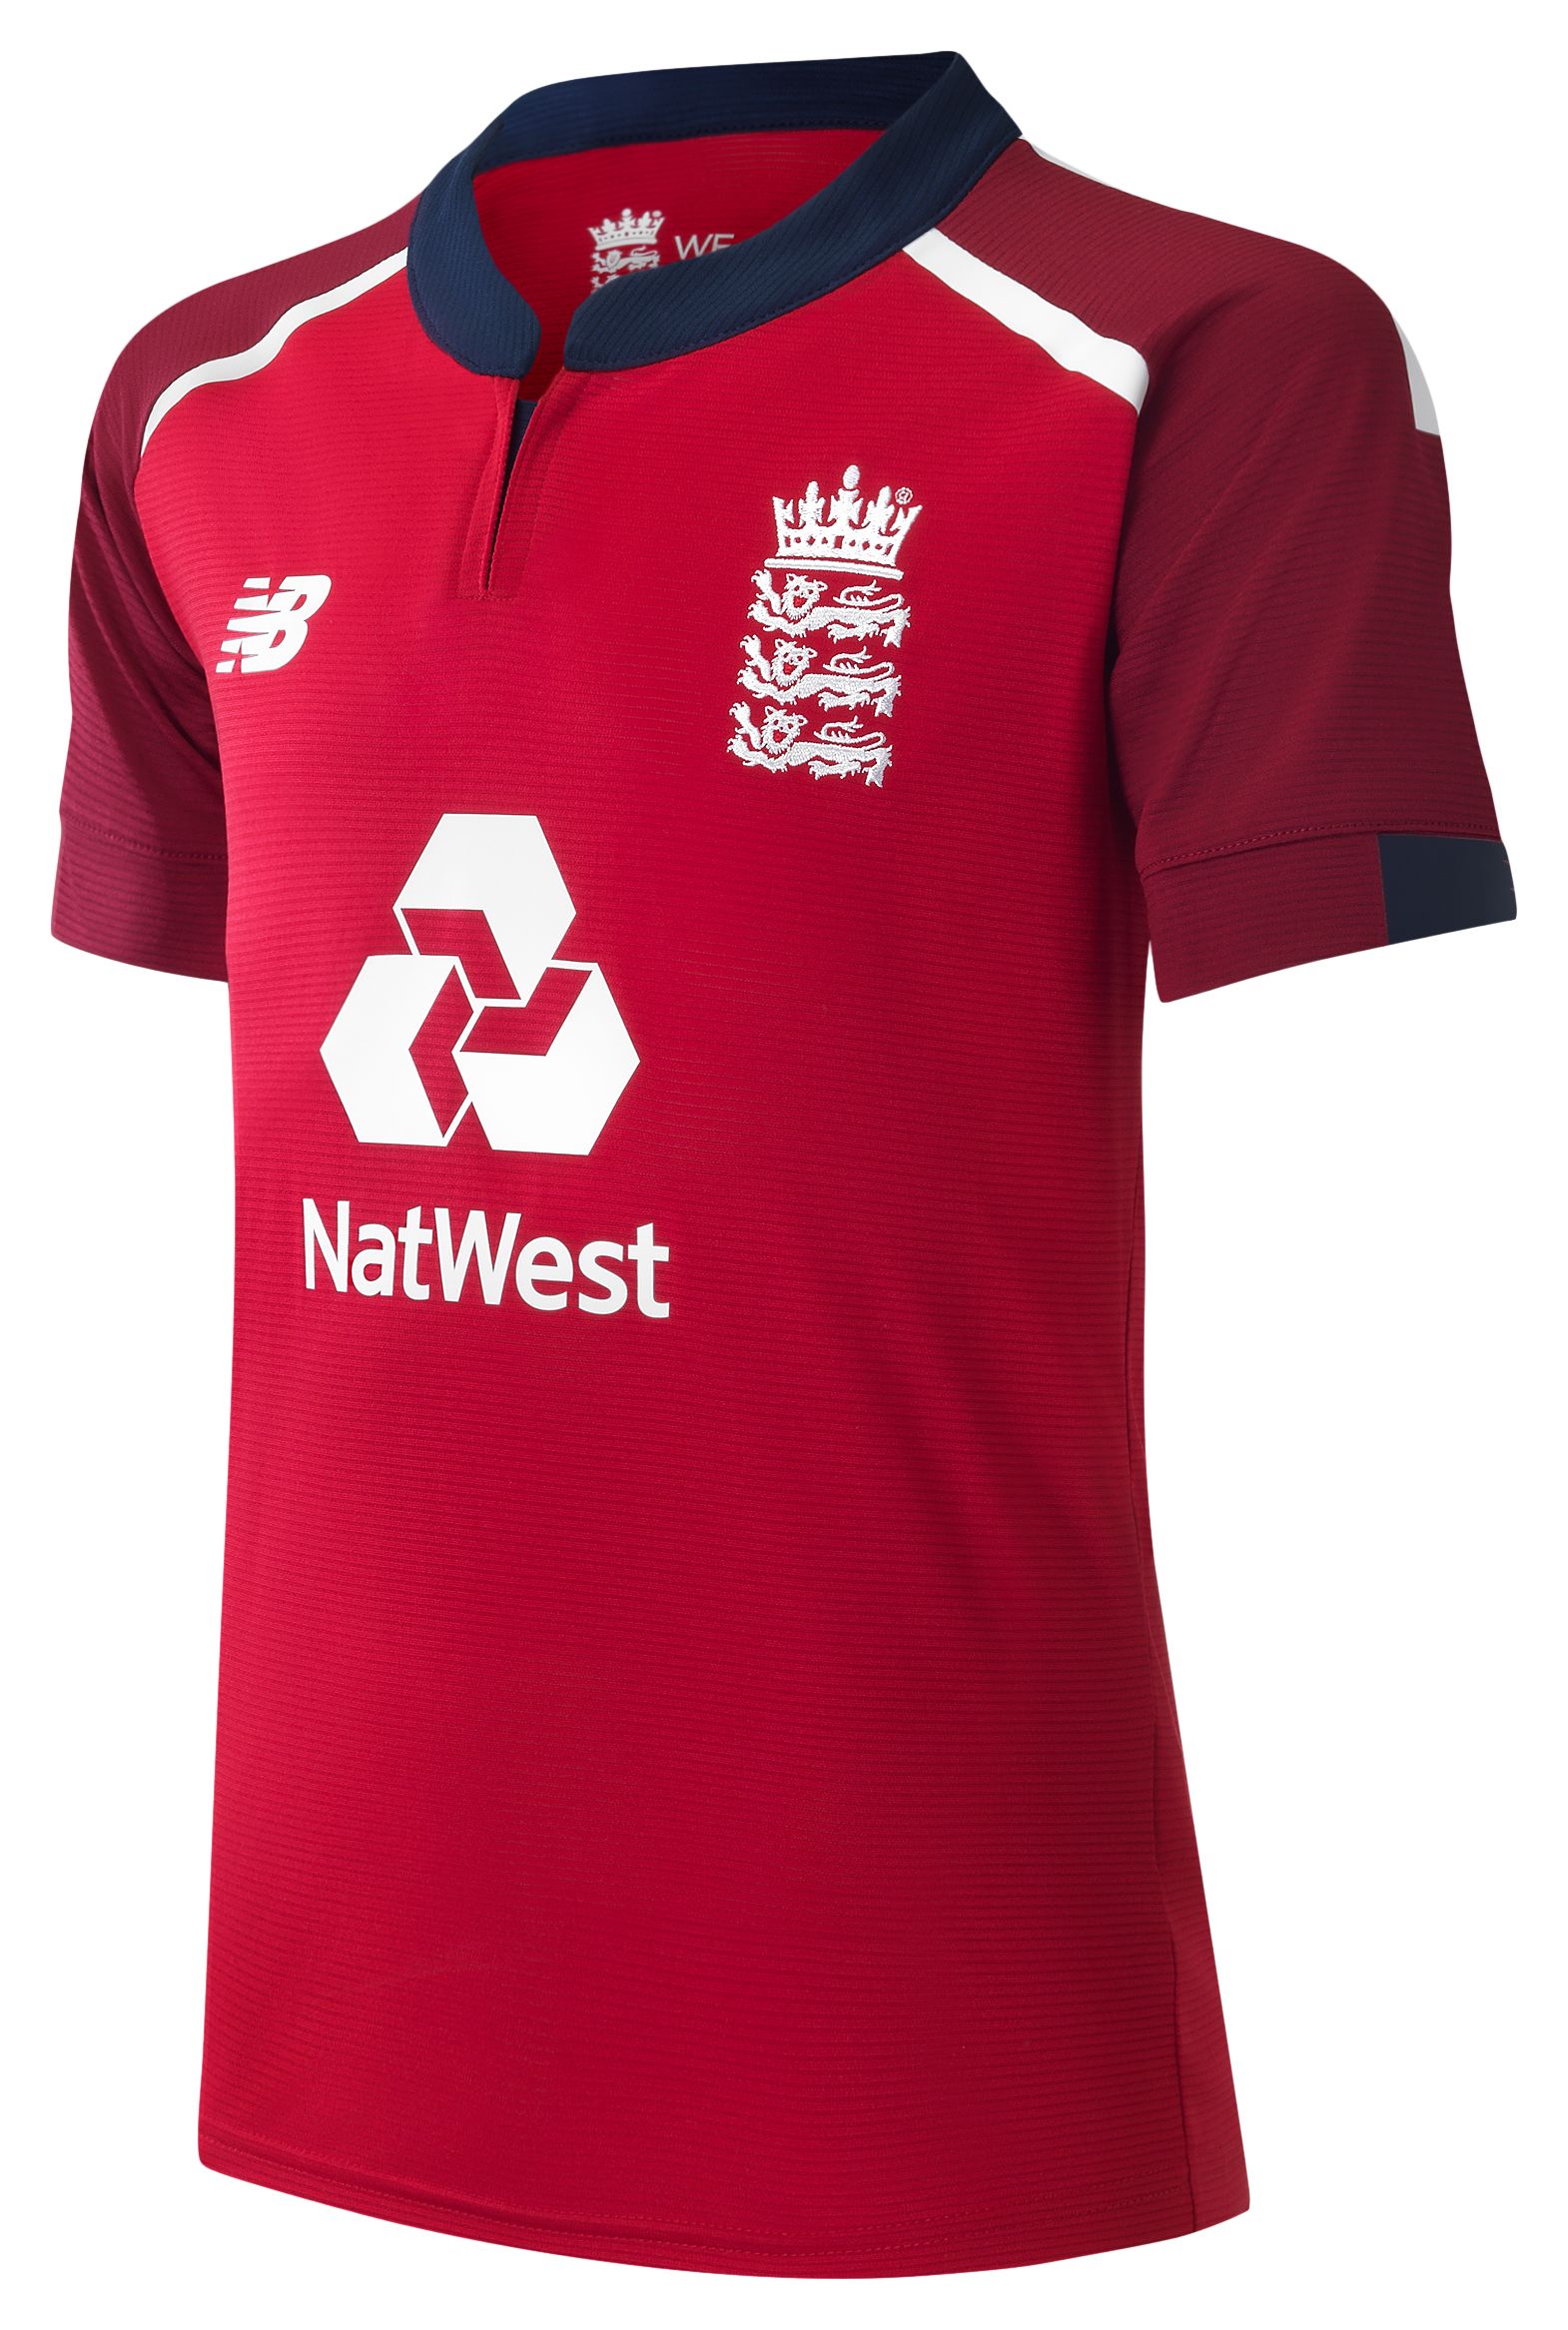 england one day cricket shirt